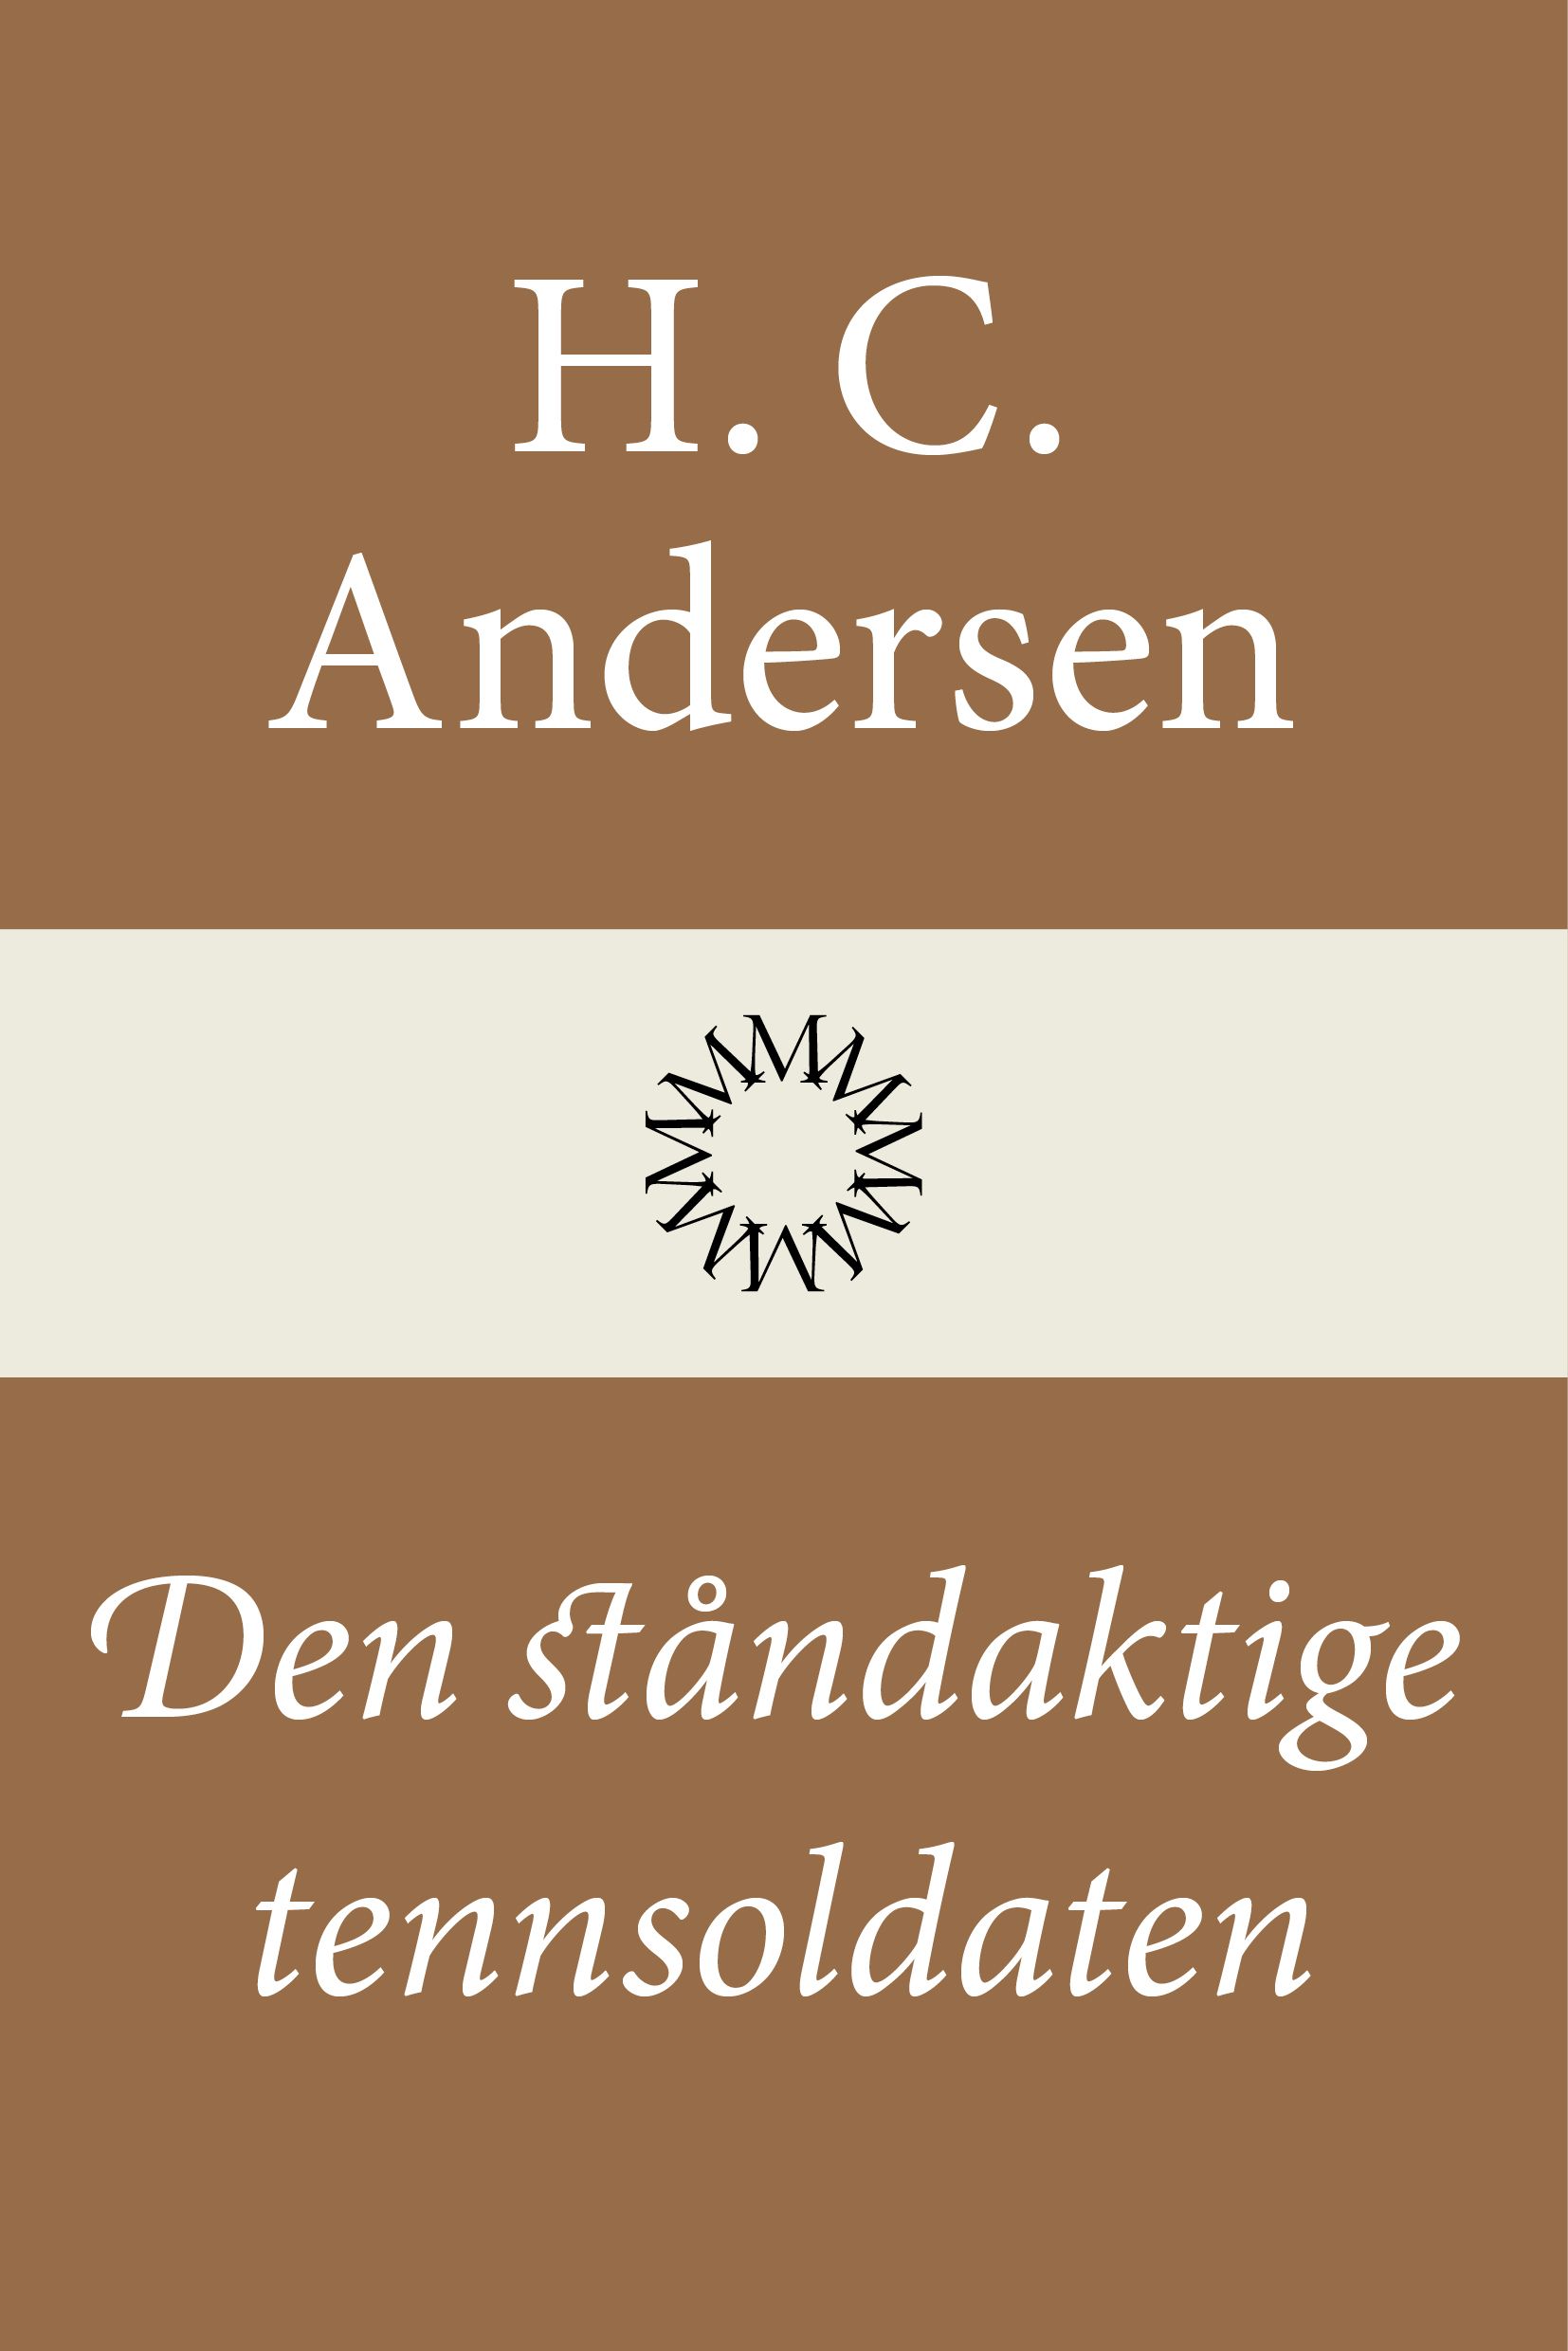 Den ståndaktige tennsoldaten, eBook by H. C. Andersen